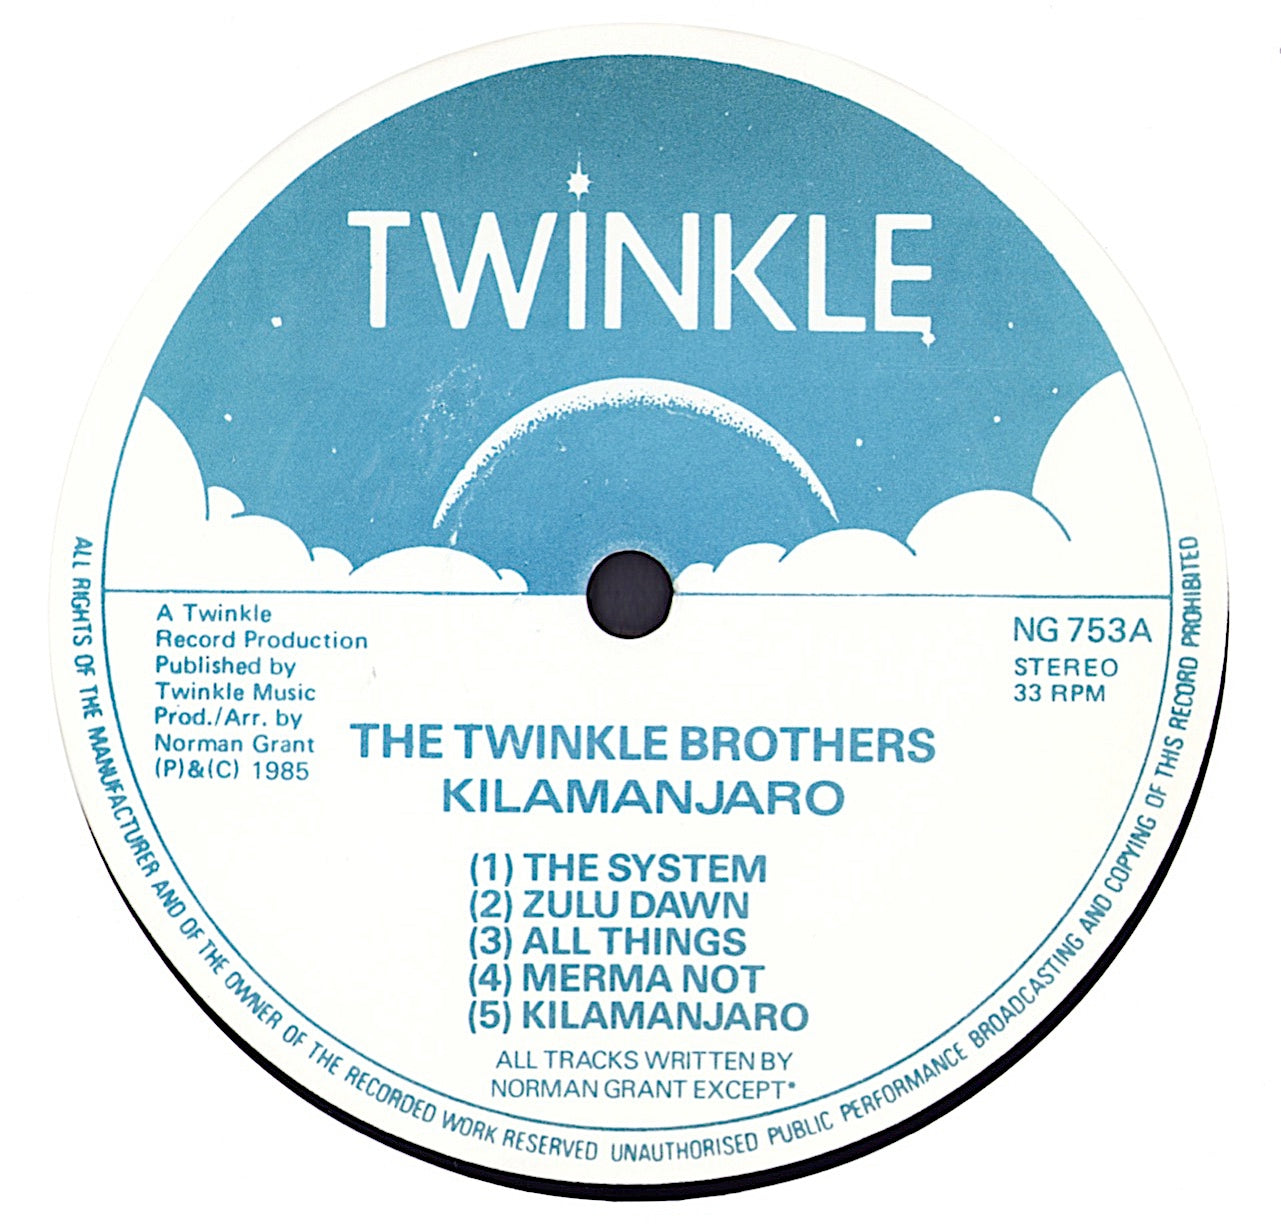 Twinkle Brothers - Kilamanjaro Vinyl LP